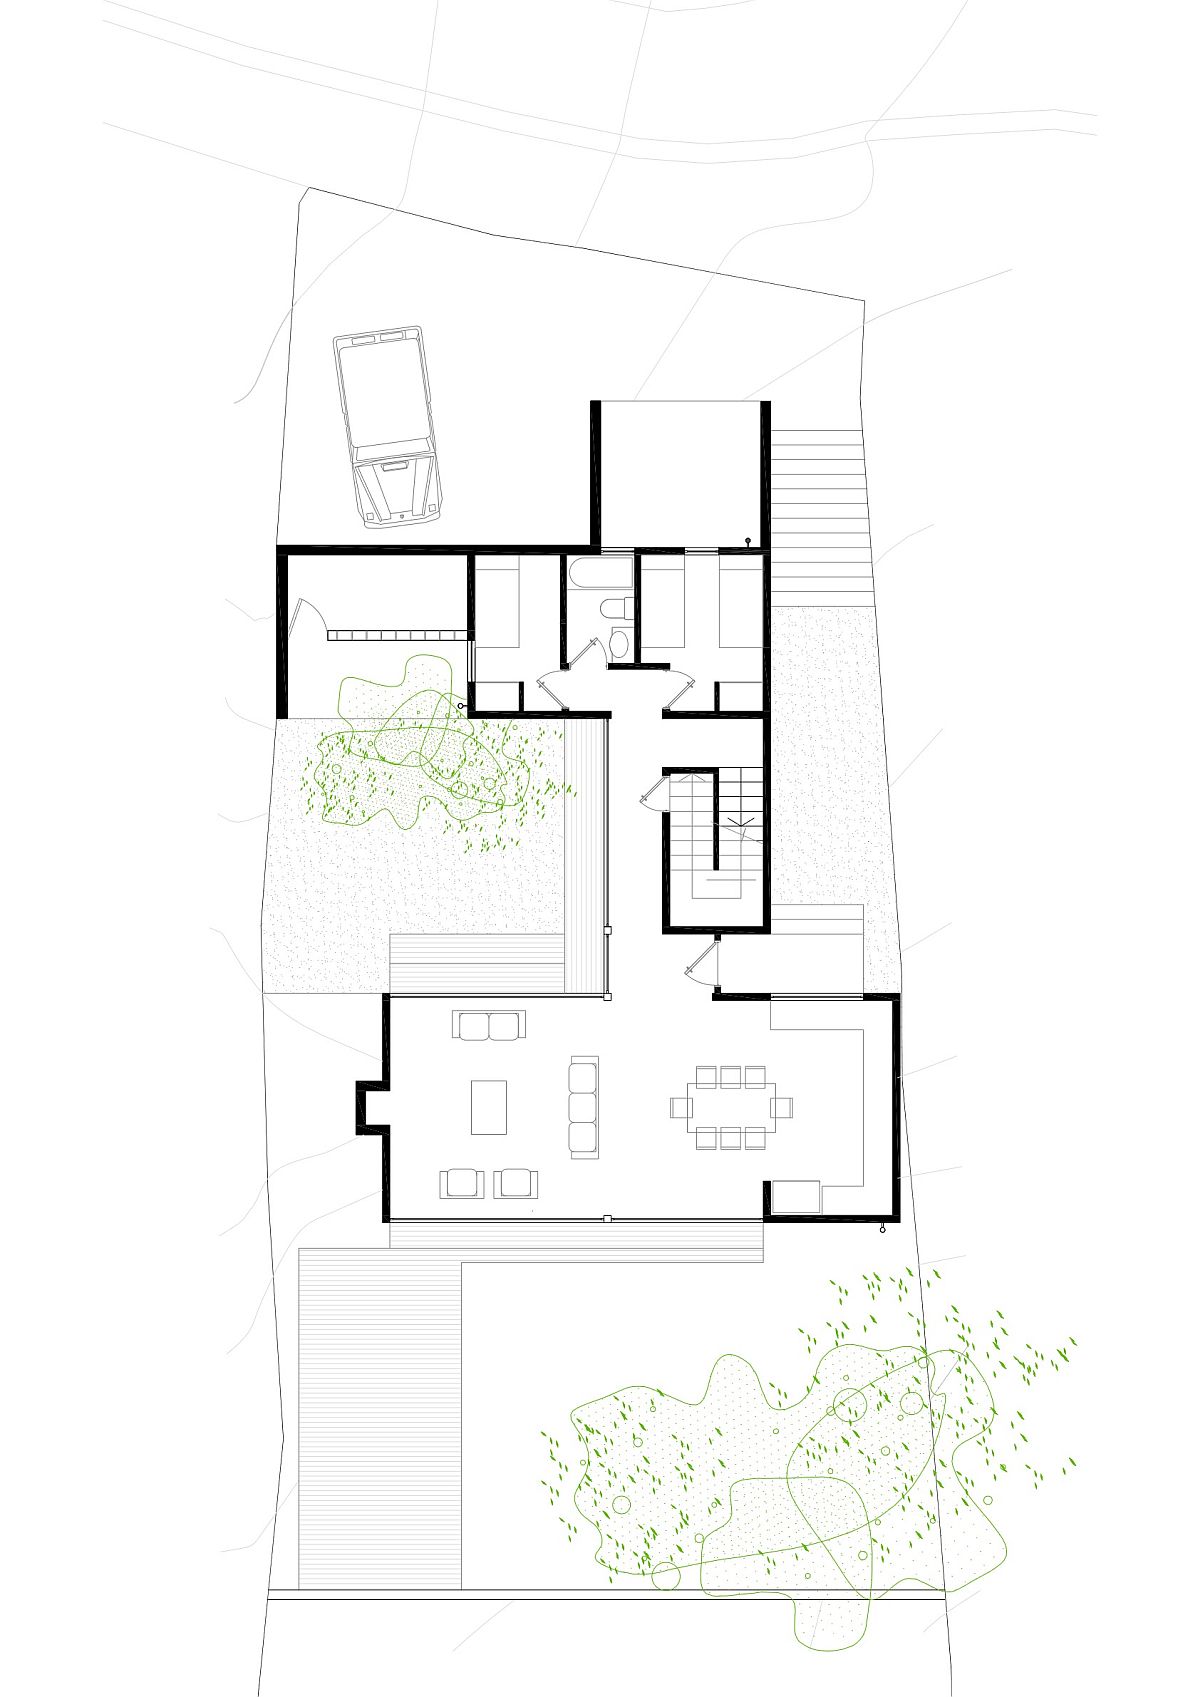 Design plan of ground level of Two Patios House designed by Ignacio Correa